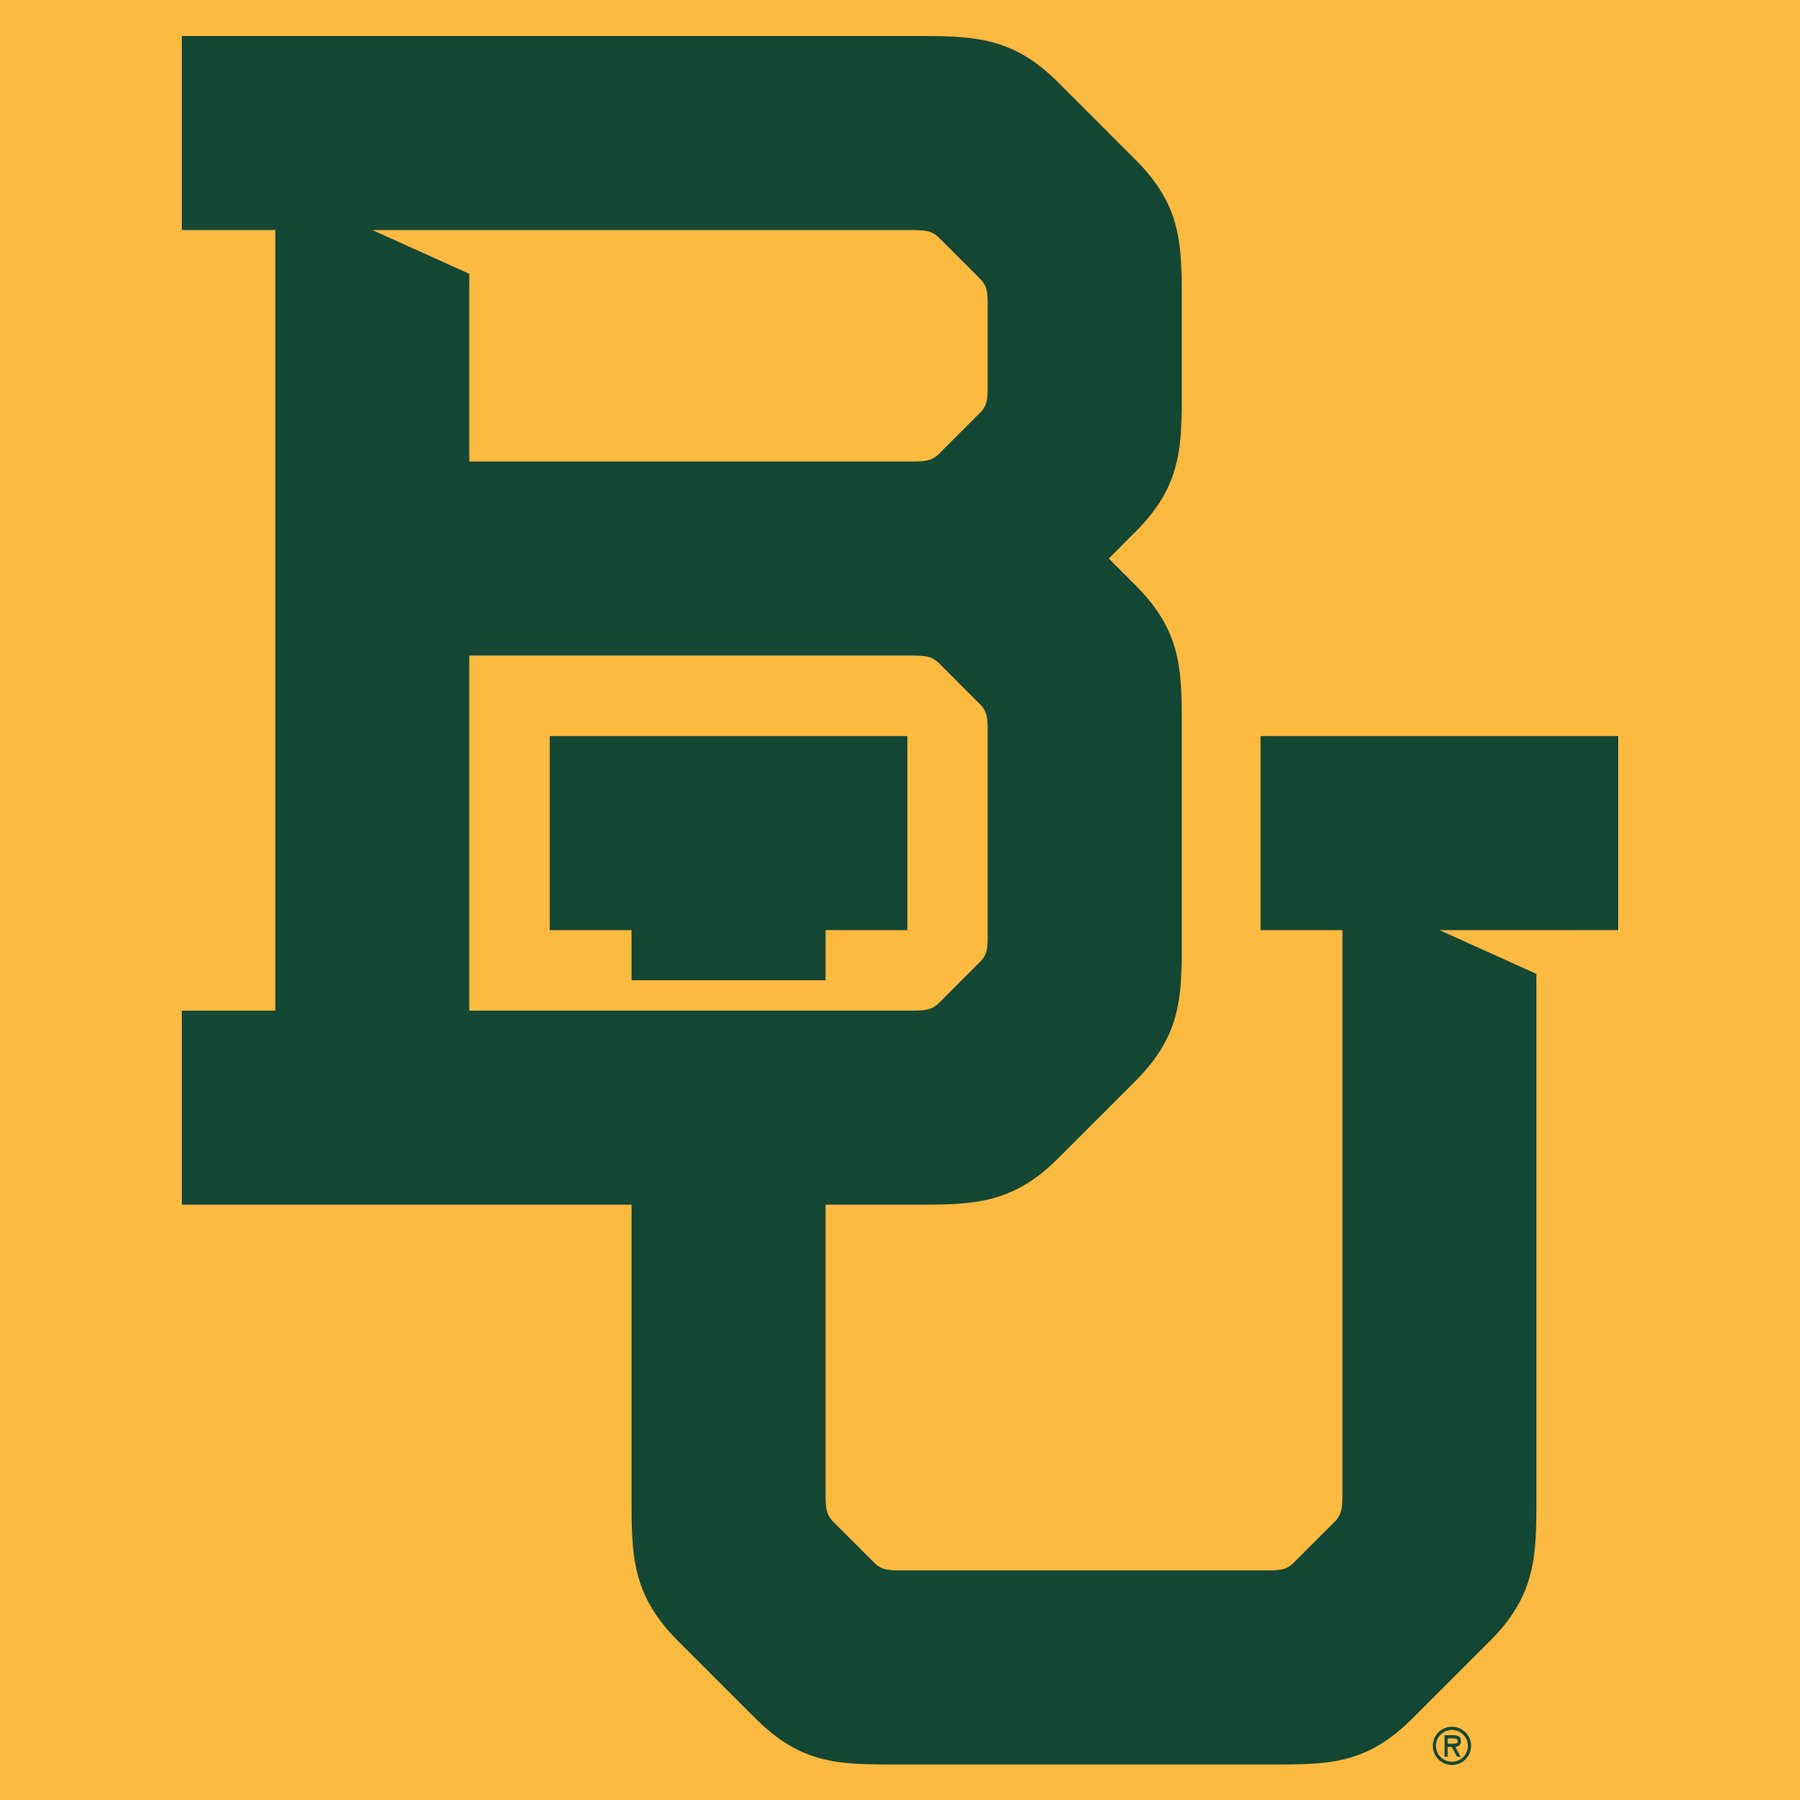 Baylor University logo